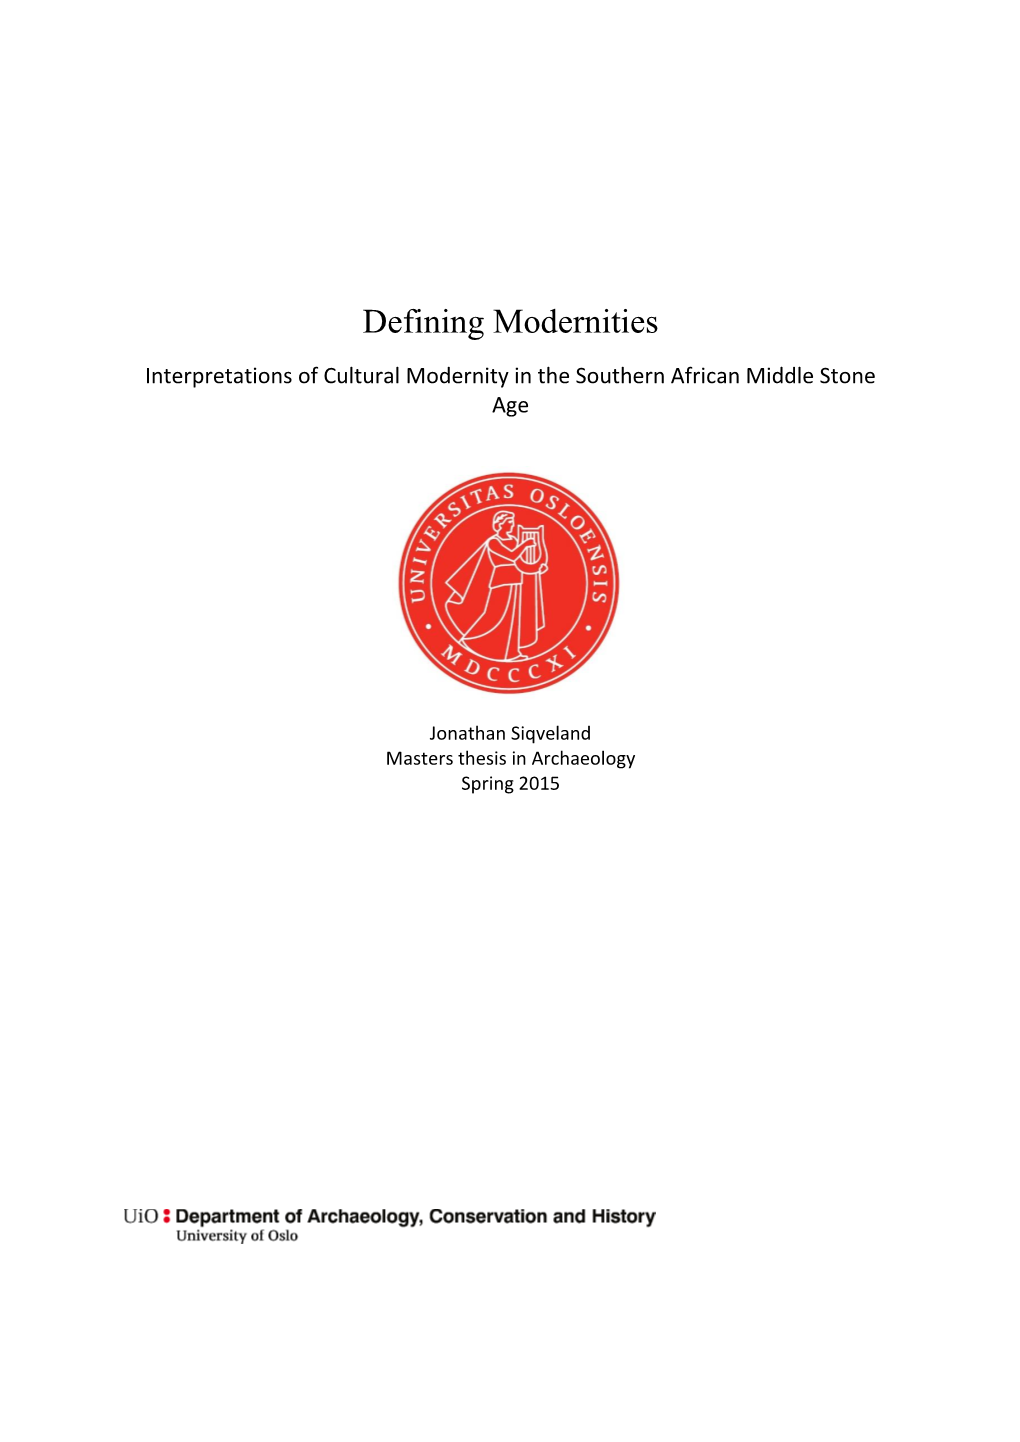 Defining-Modernities.Pdf (1.145Mb)